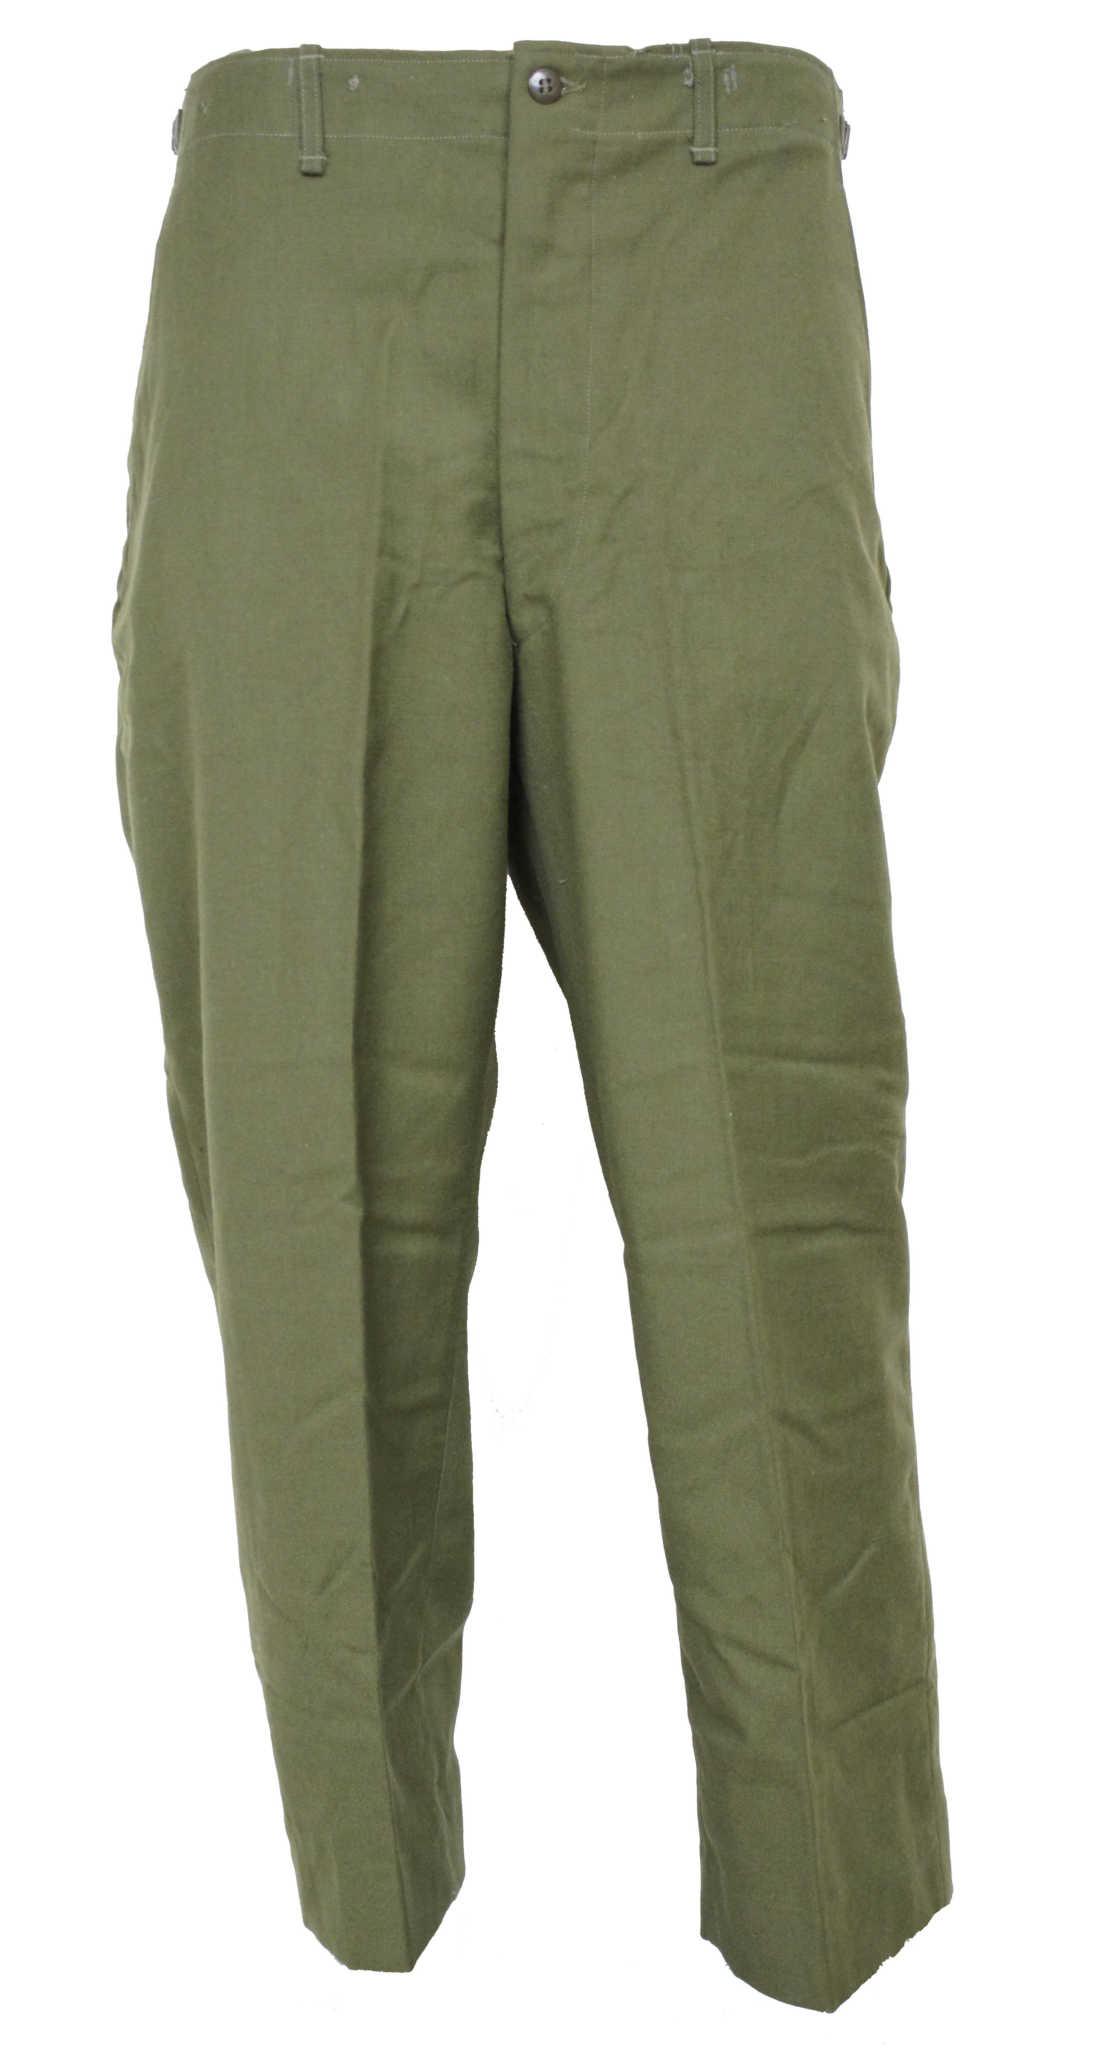 GI M-51 Korean Wool Field Pants - Military Stripes